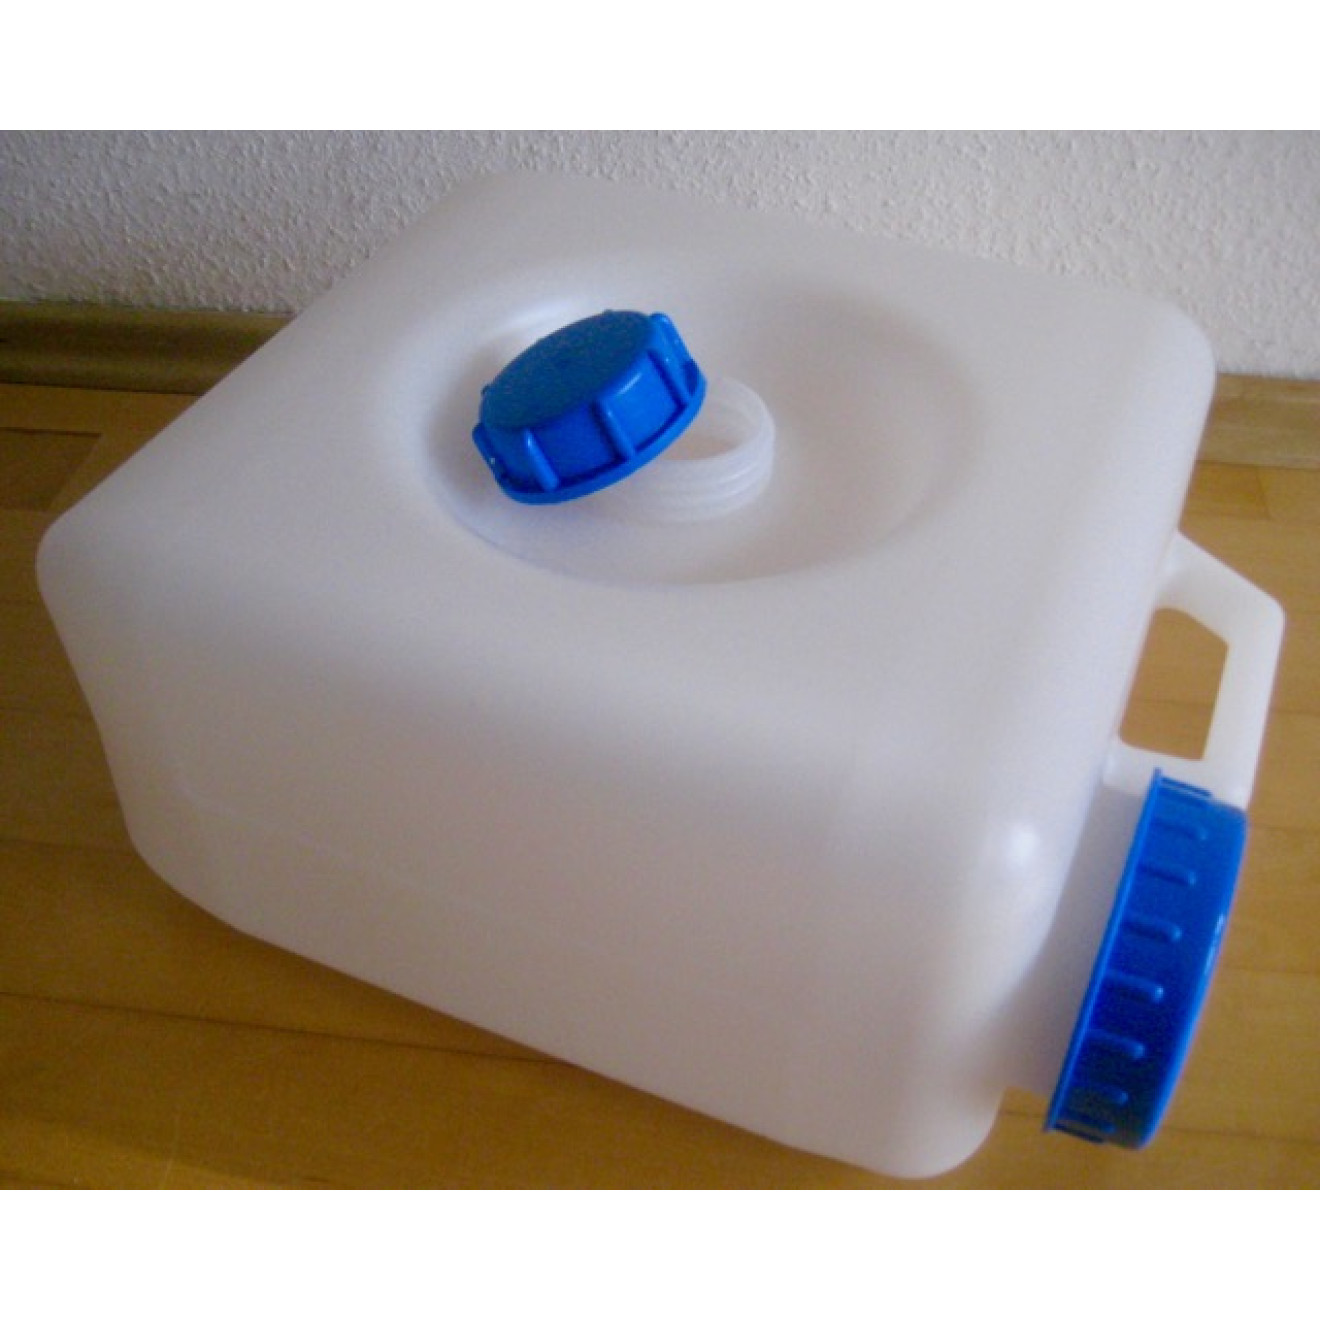 Kanister blau 10 Liter - Kompetenz in Filtration